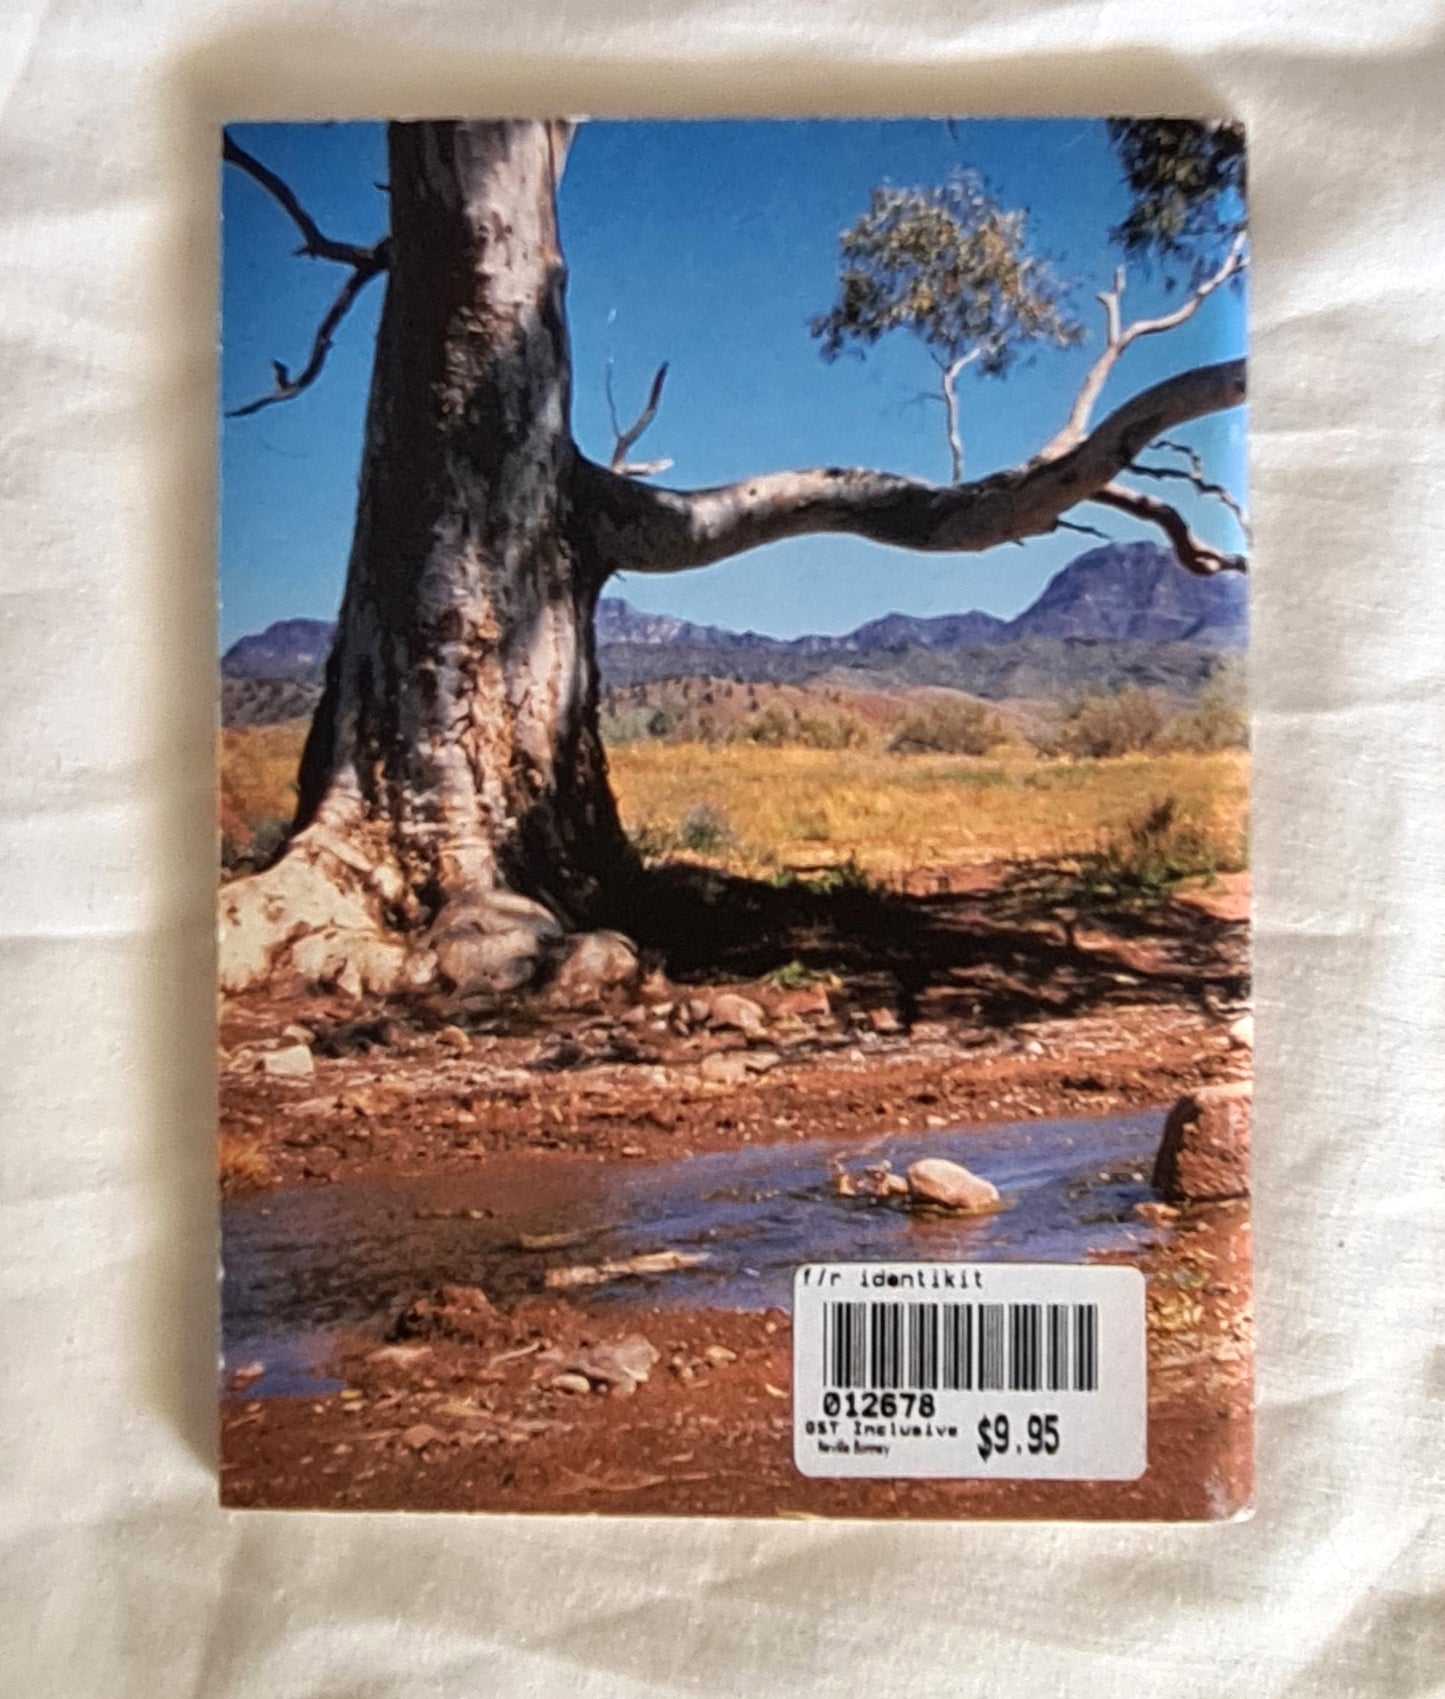 Common Plants of the Flinders Ranges by Neville Bonney